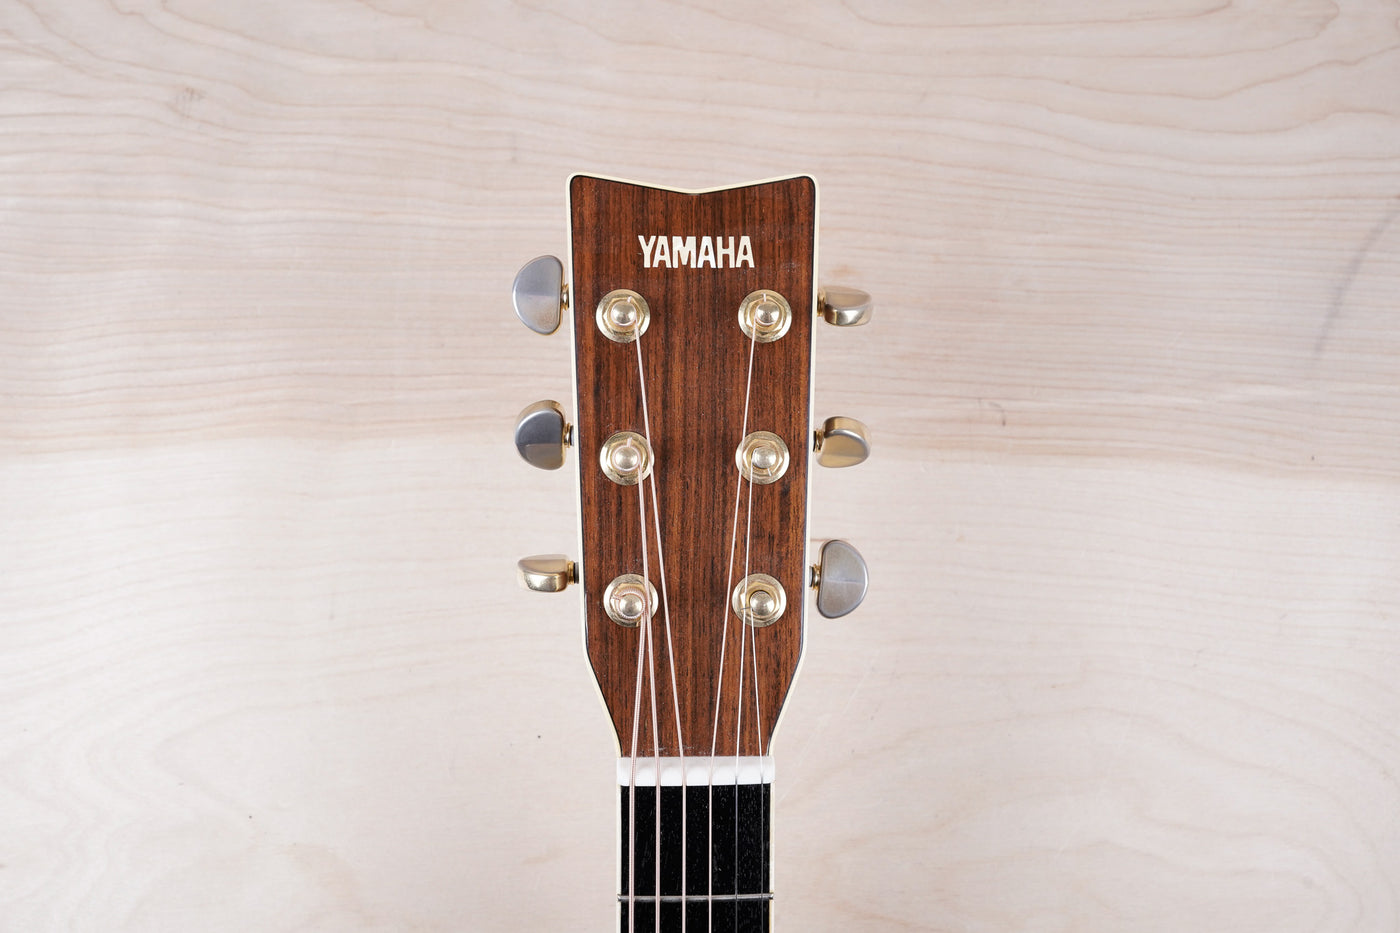 Yamaha FG-400D Acoustic Guitar MIJ 1981 Natural w/ Bag